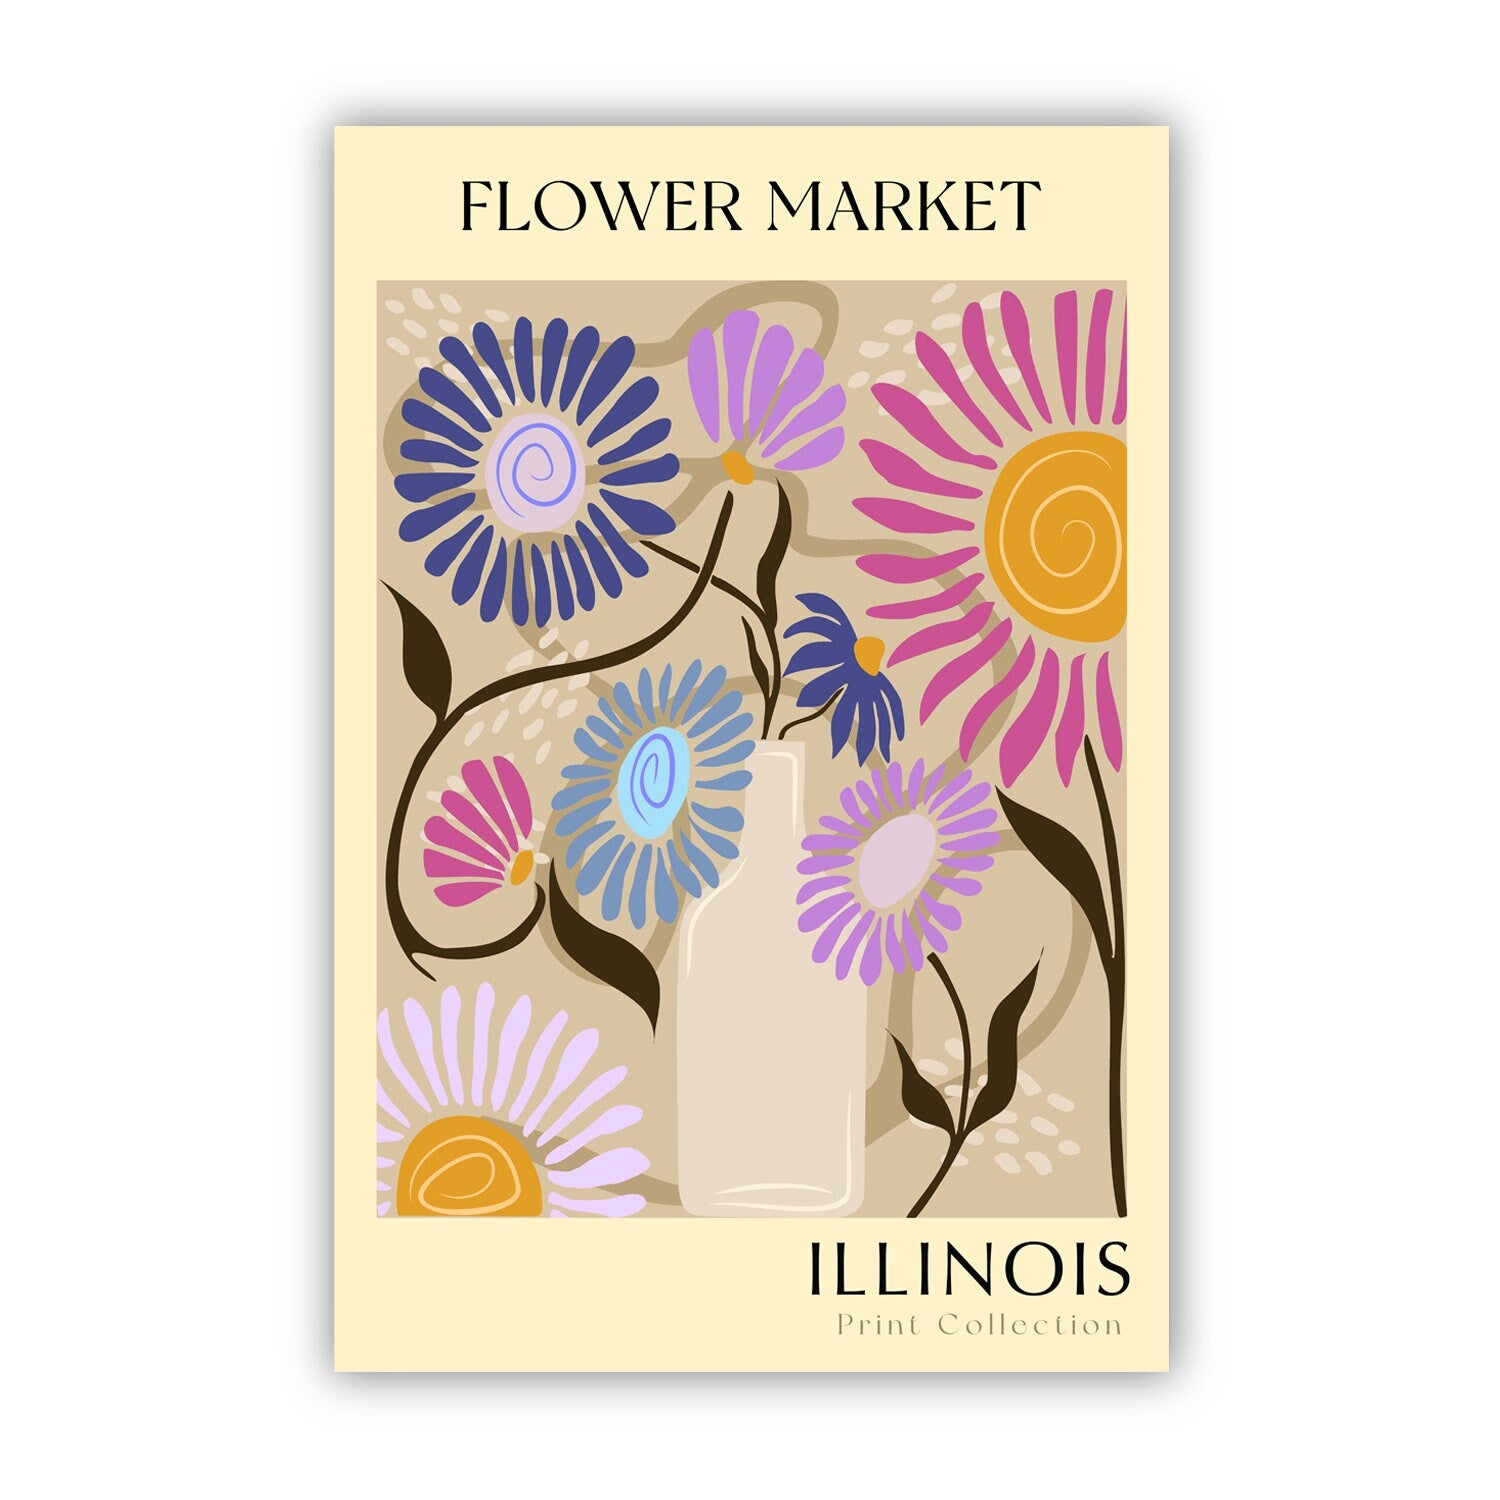 Illinois State flower print, USA states poster, Illinois flower market poster, Botanical poster, Nature poster artwork, Boho floral wall art